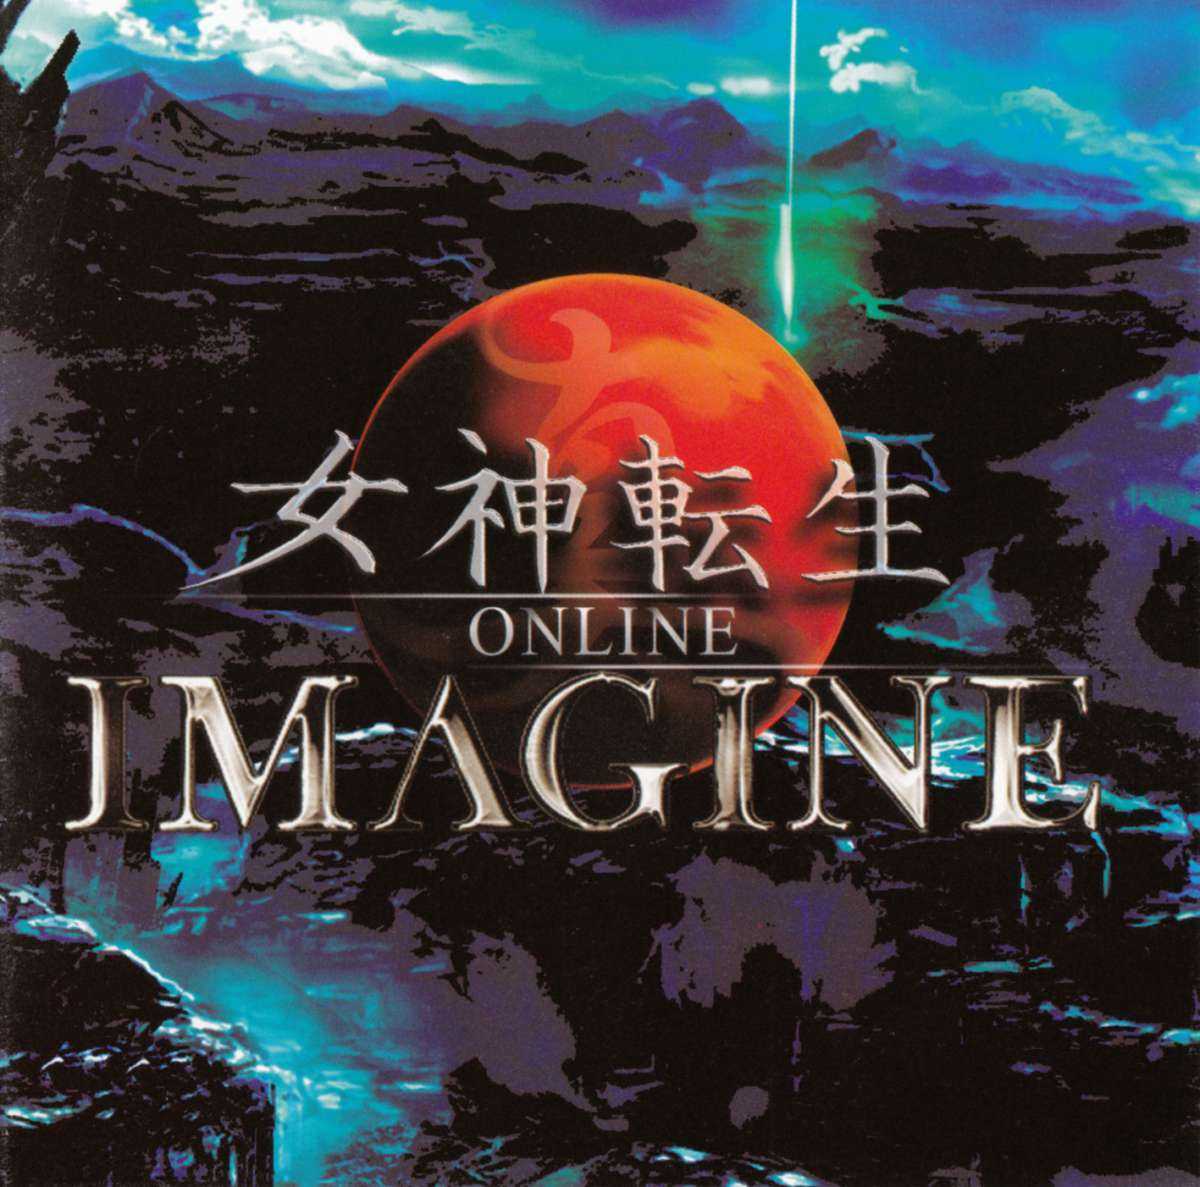 Shin Megami Tensei Imagine